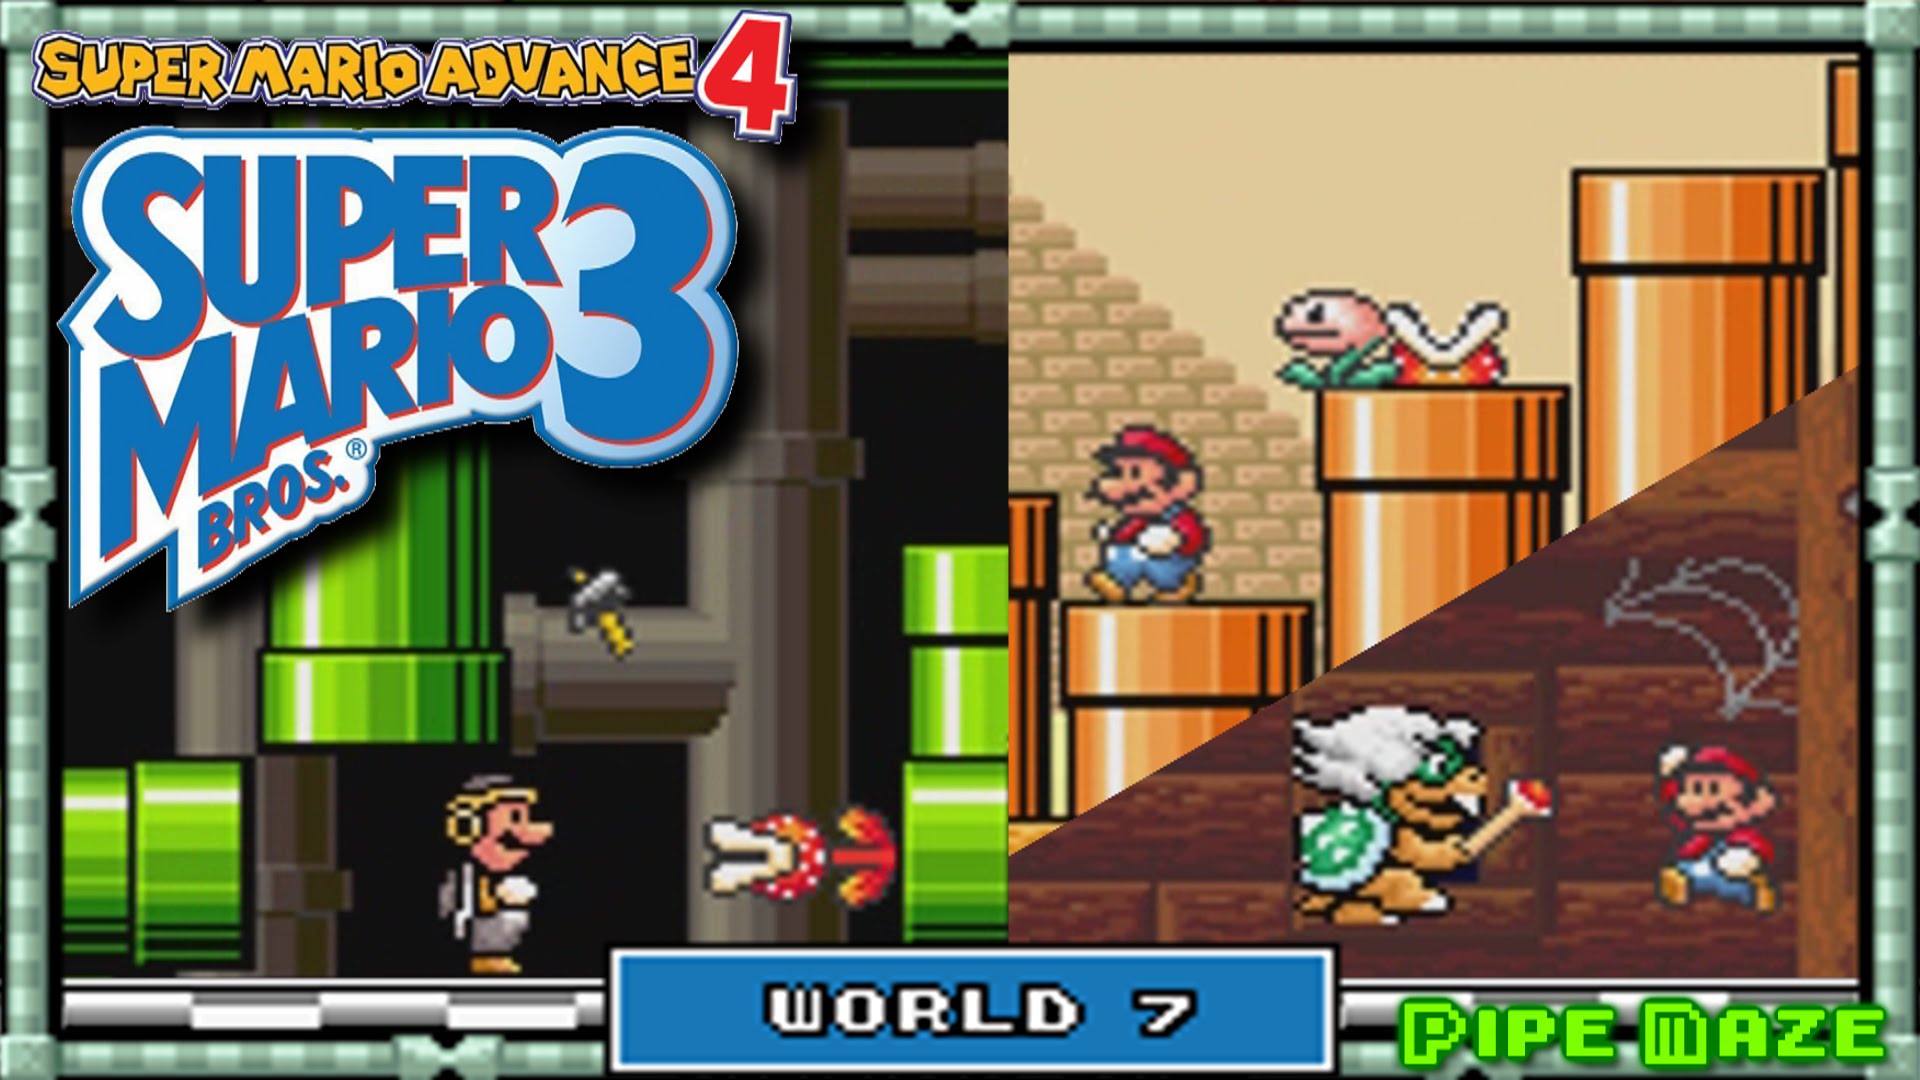 Super Mario Advance 4 - Super Mario Bros. 3 Pics, Video Game Collection